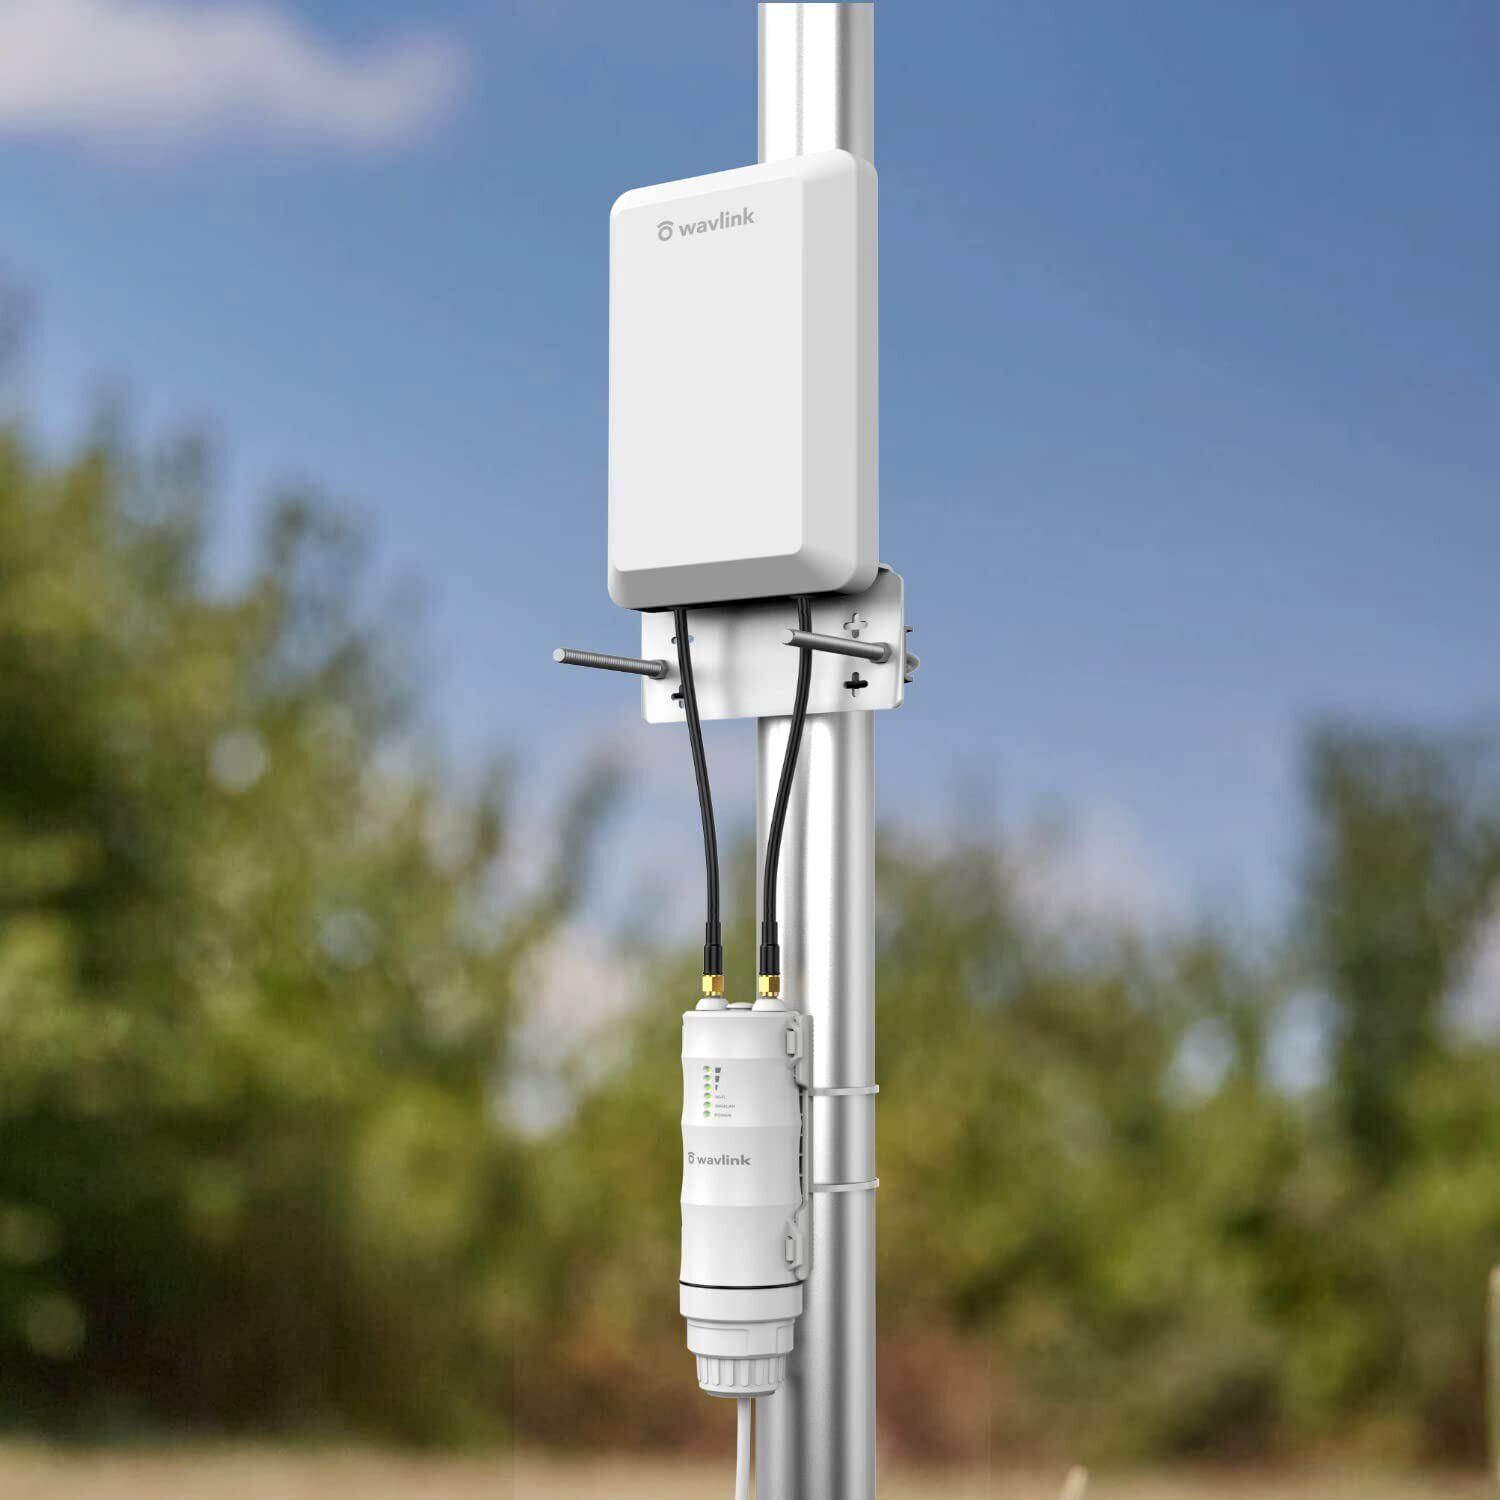 N300 Outdoor WiFi Range Extender Wireless AP Router Internet Signal Booster